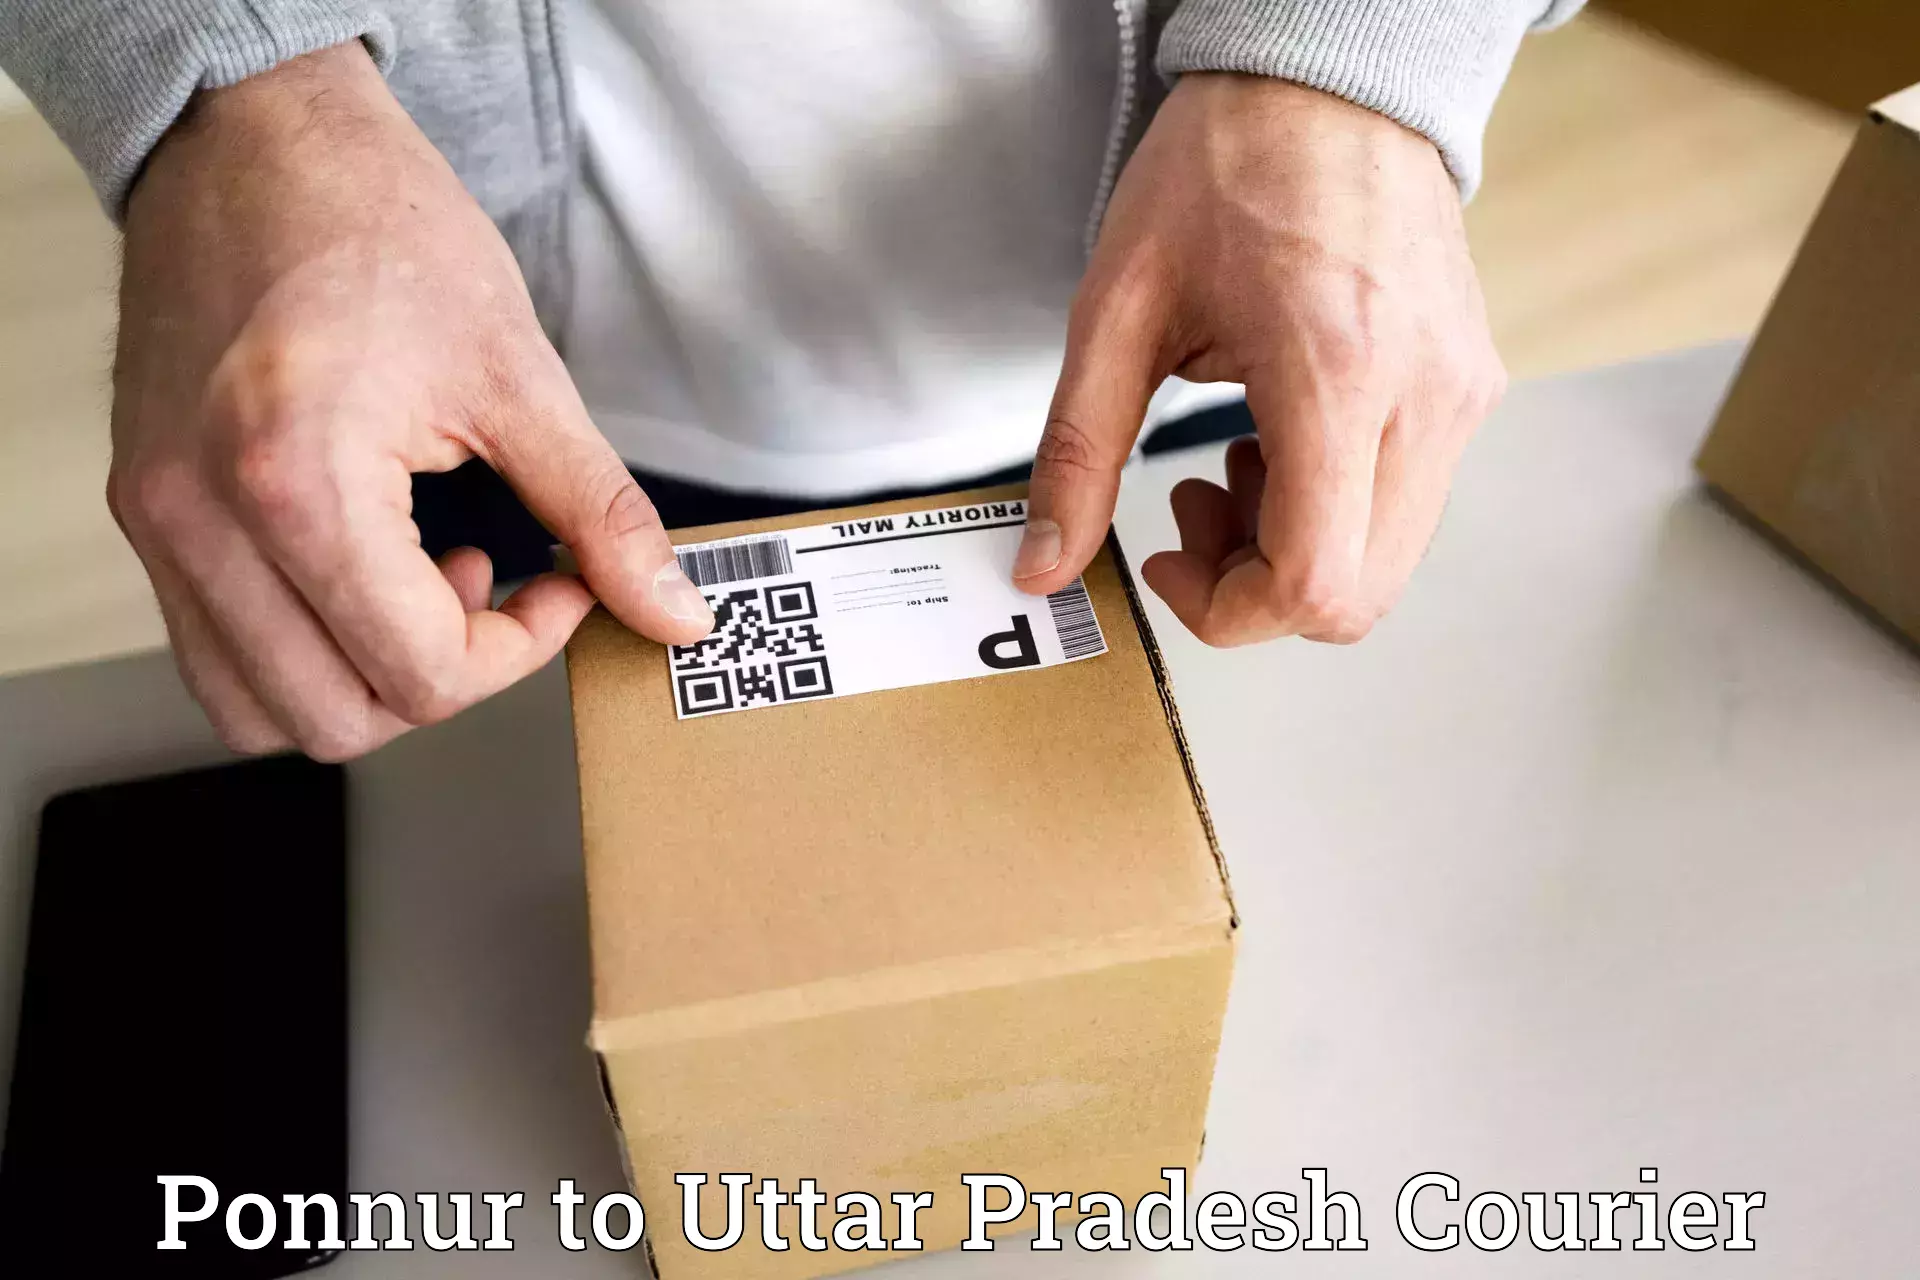 Same-day delivery solutions Ponnur to Aligarh Muslim University